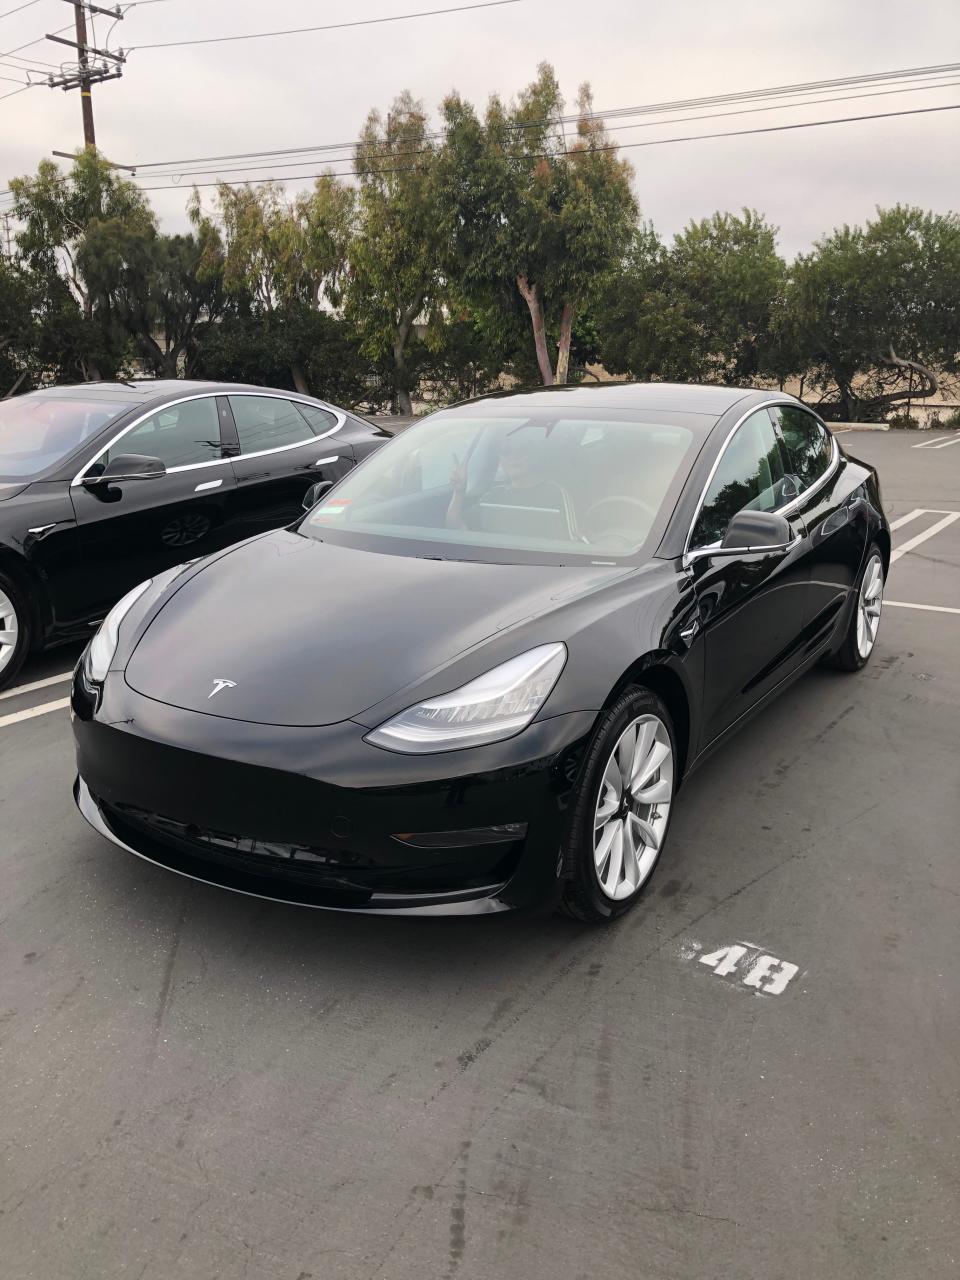 A black Tesla parked in a lot.